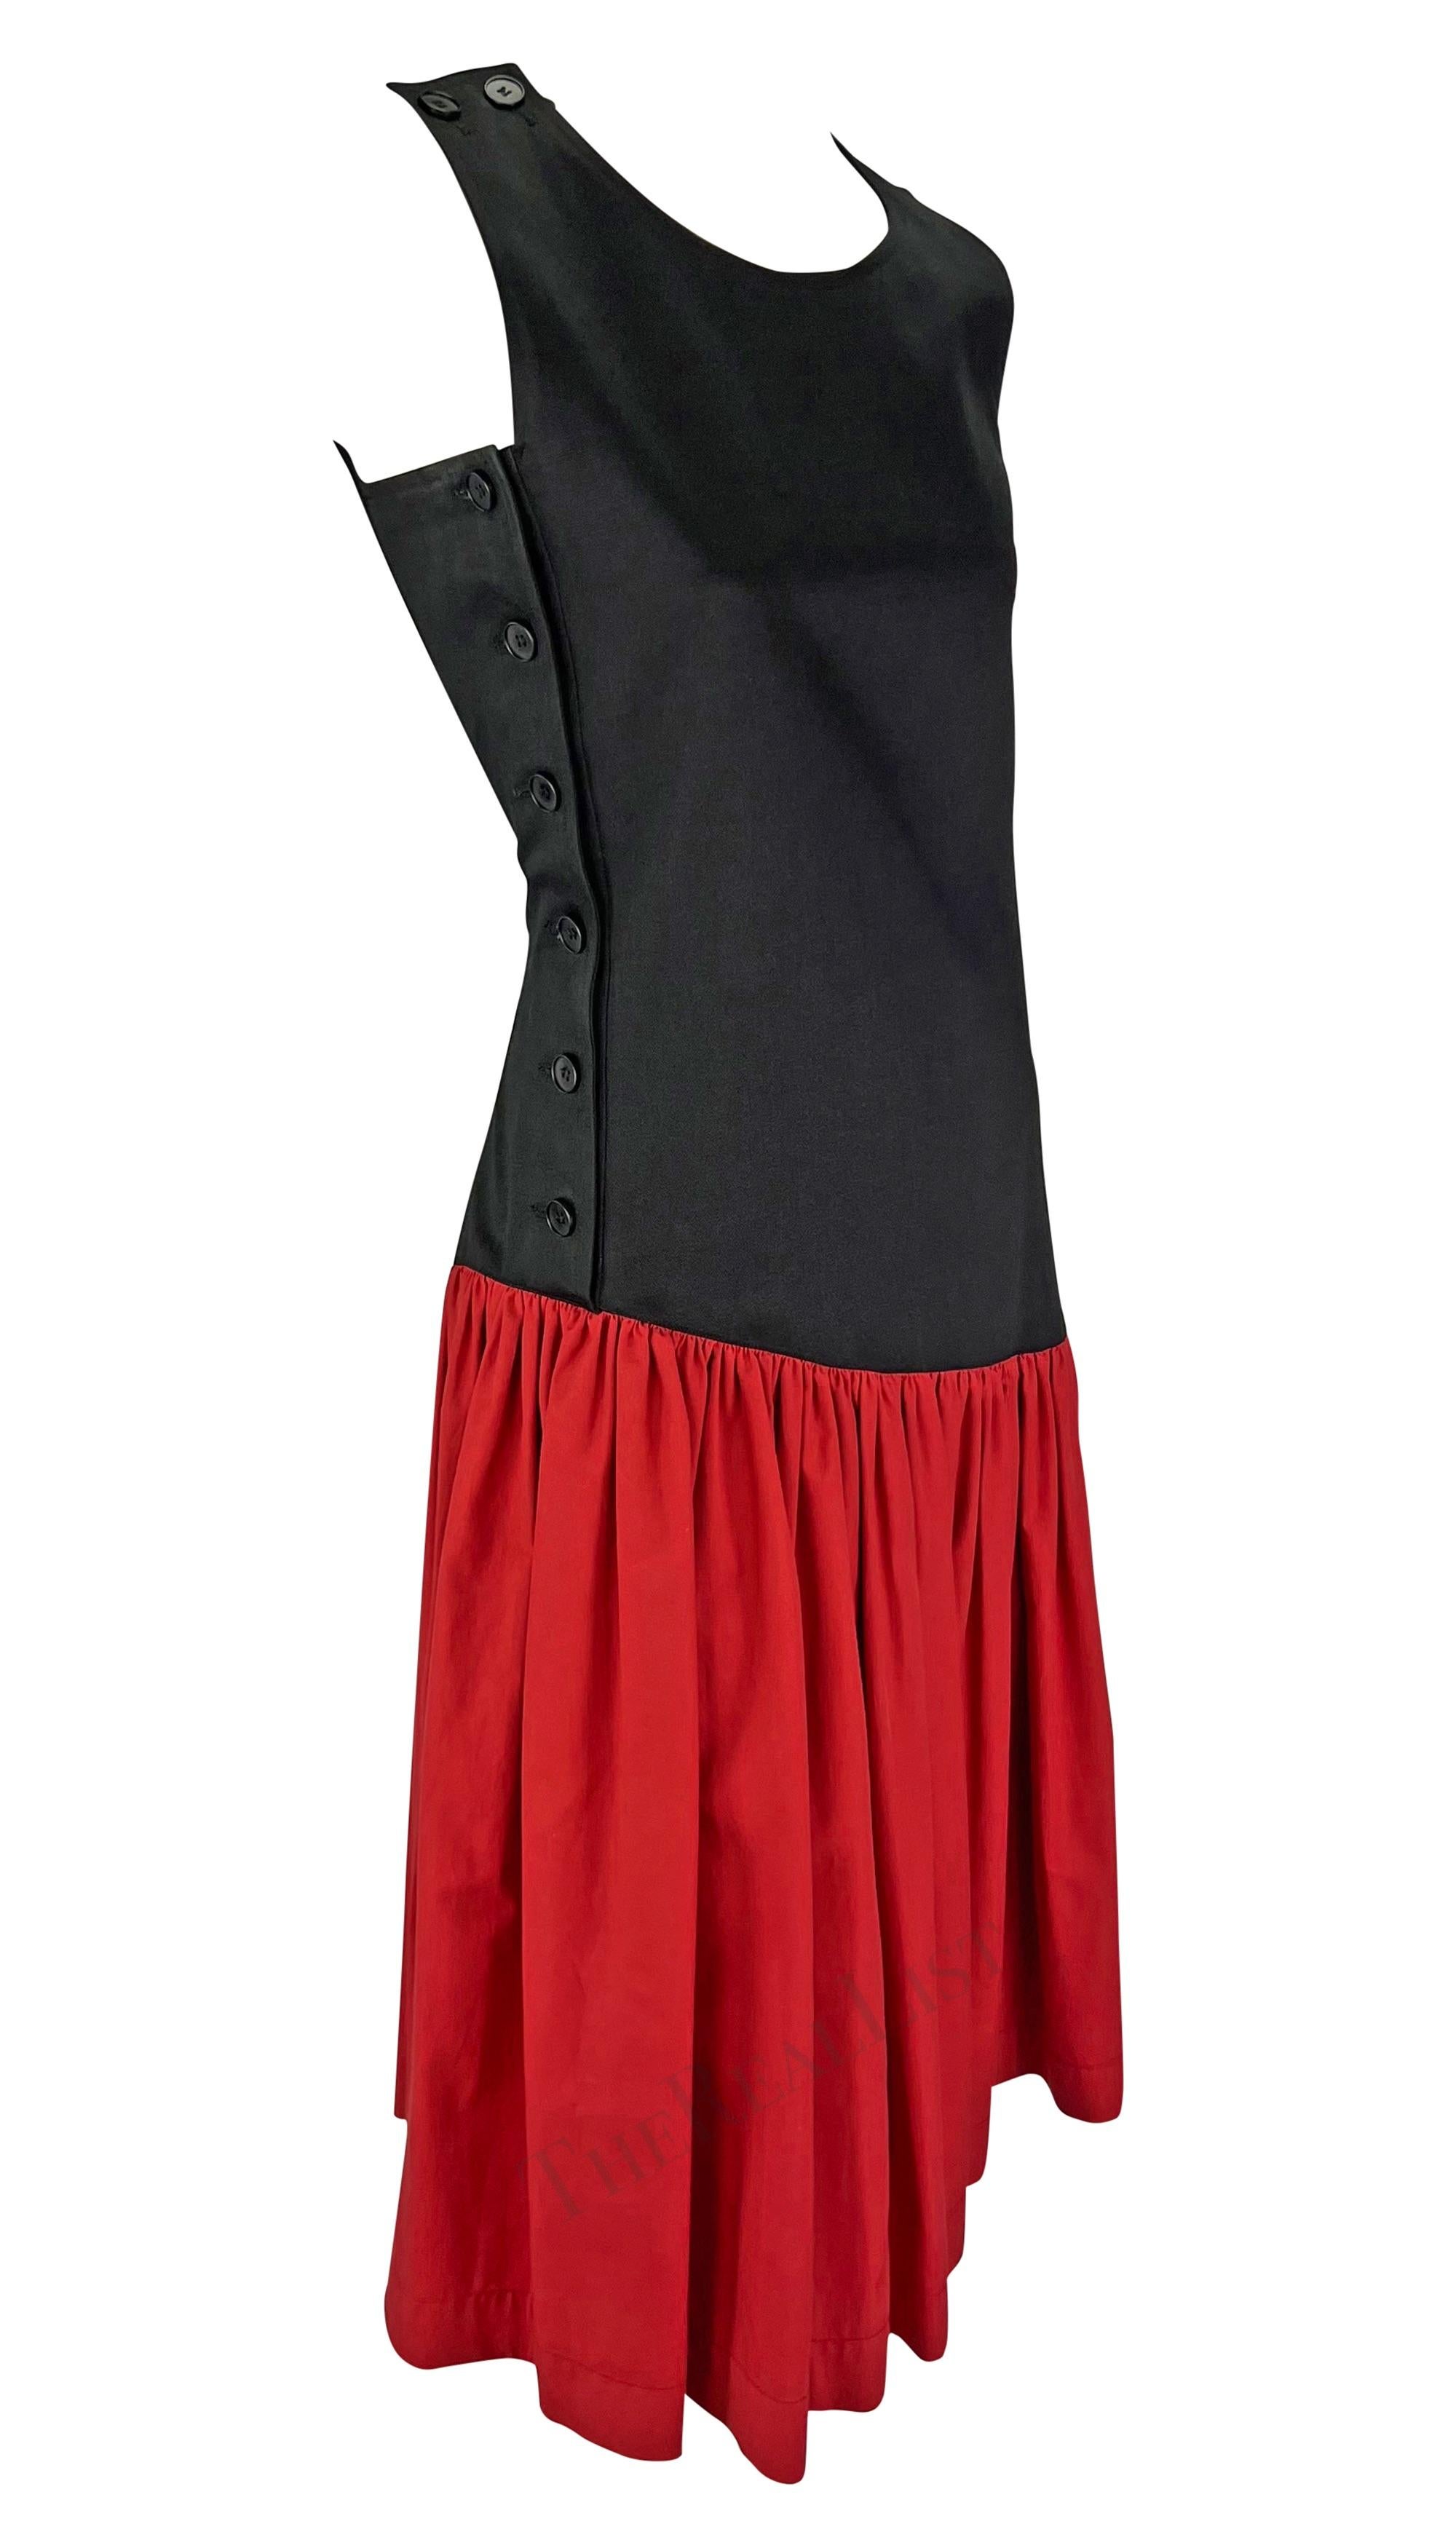 S/S 1983 Saint Laurent Rive Gauche Runway Ad Black Red Sleeveless Dress For Sale 5